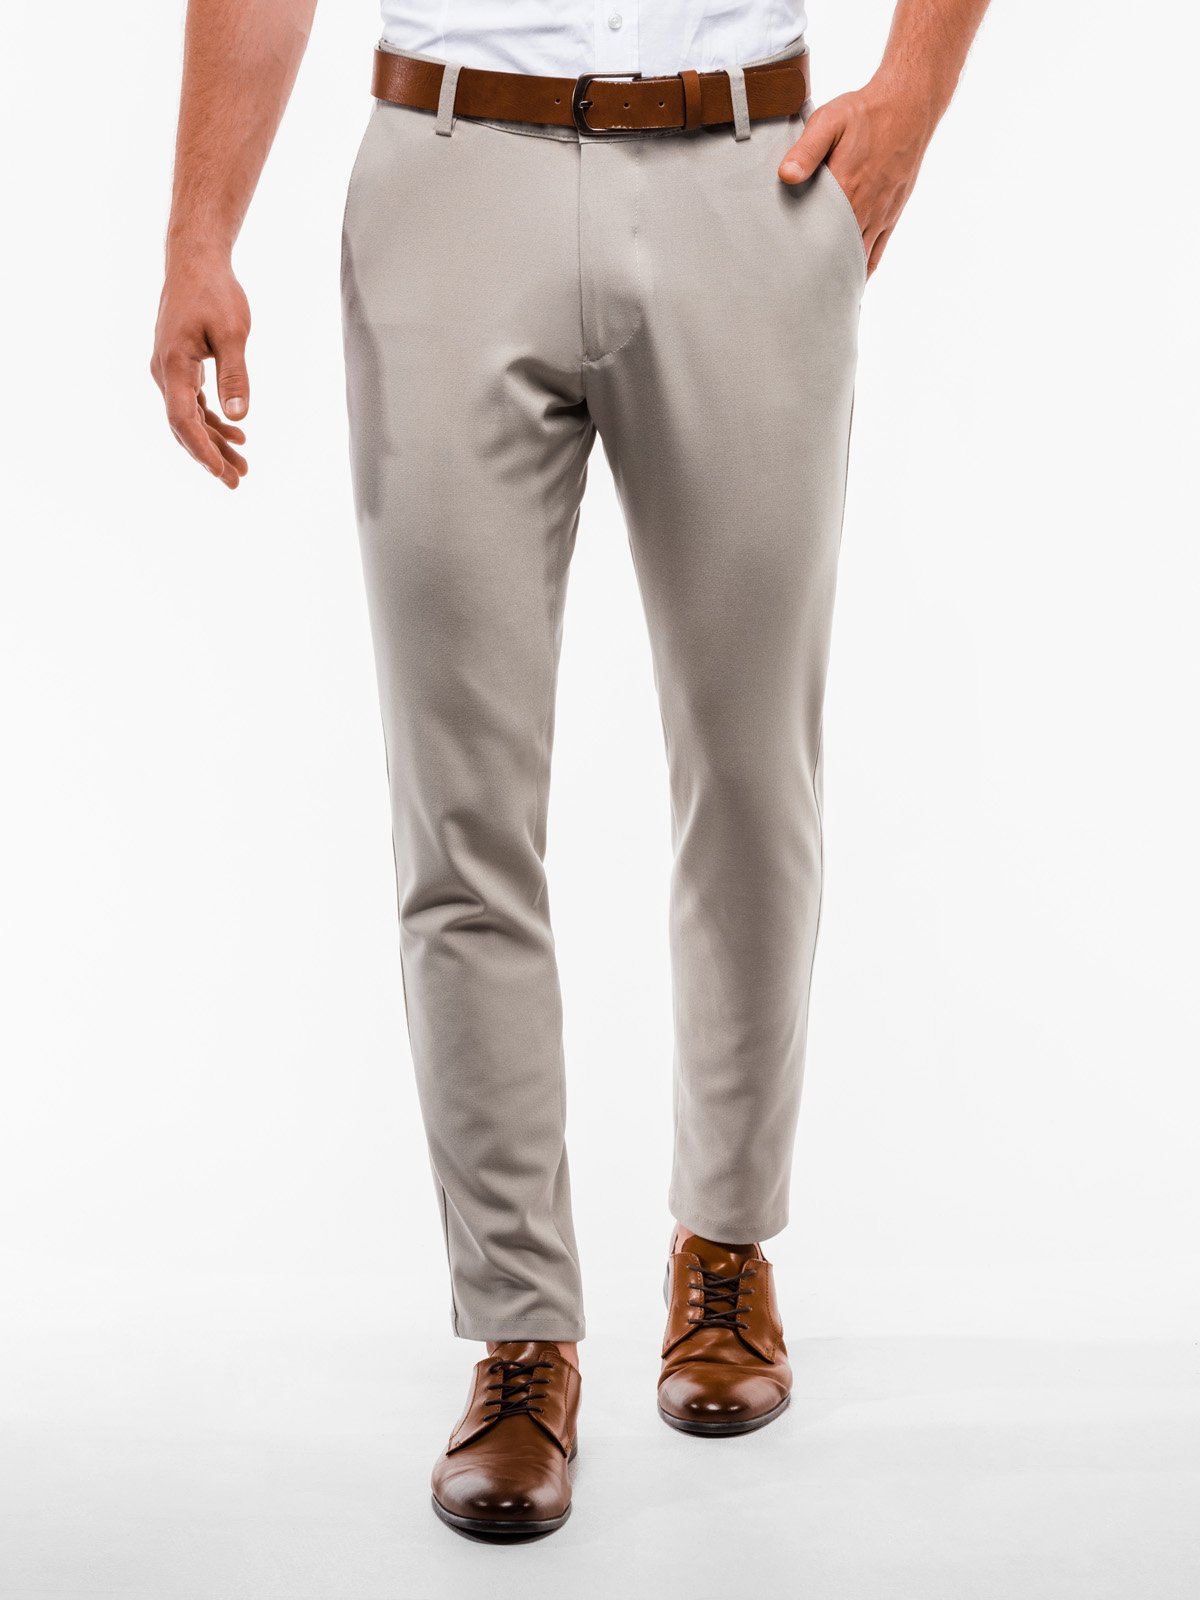 Men's pants chinos P832 - beige | MODONE wholesale - Clothing For Men